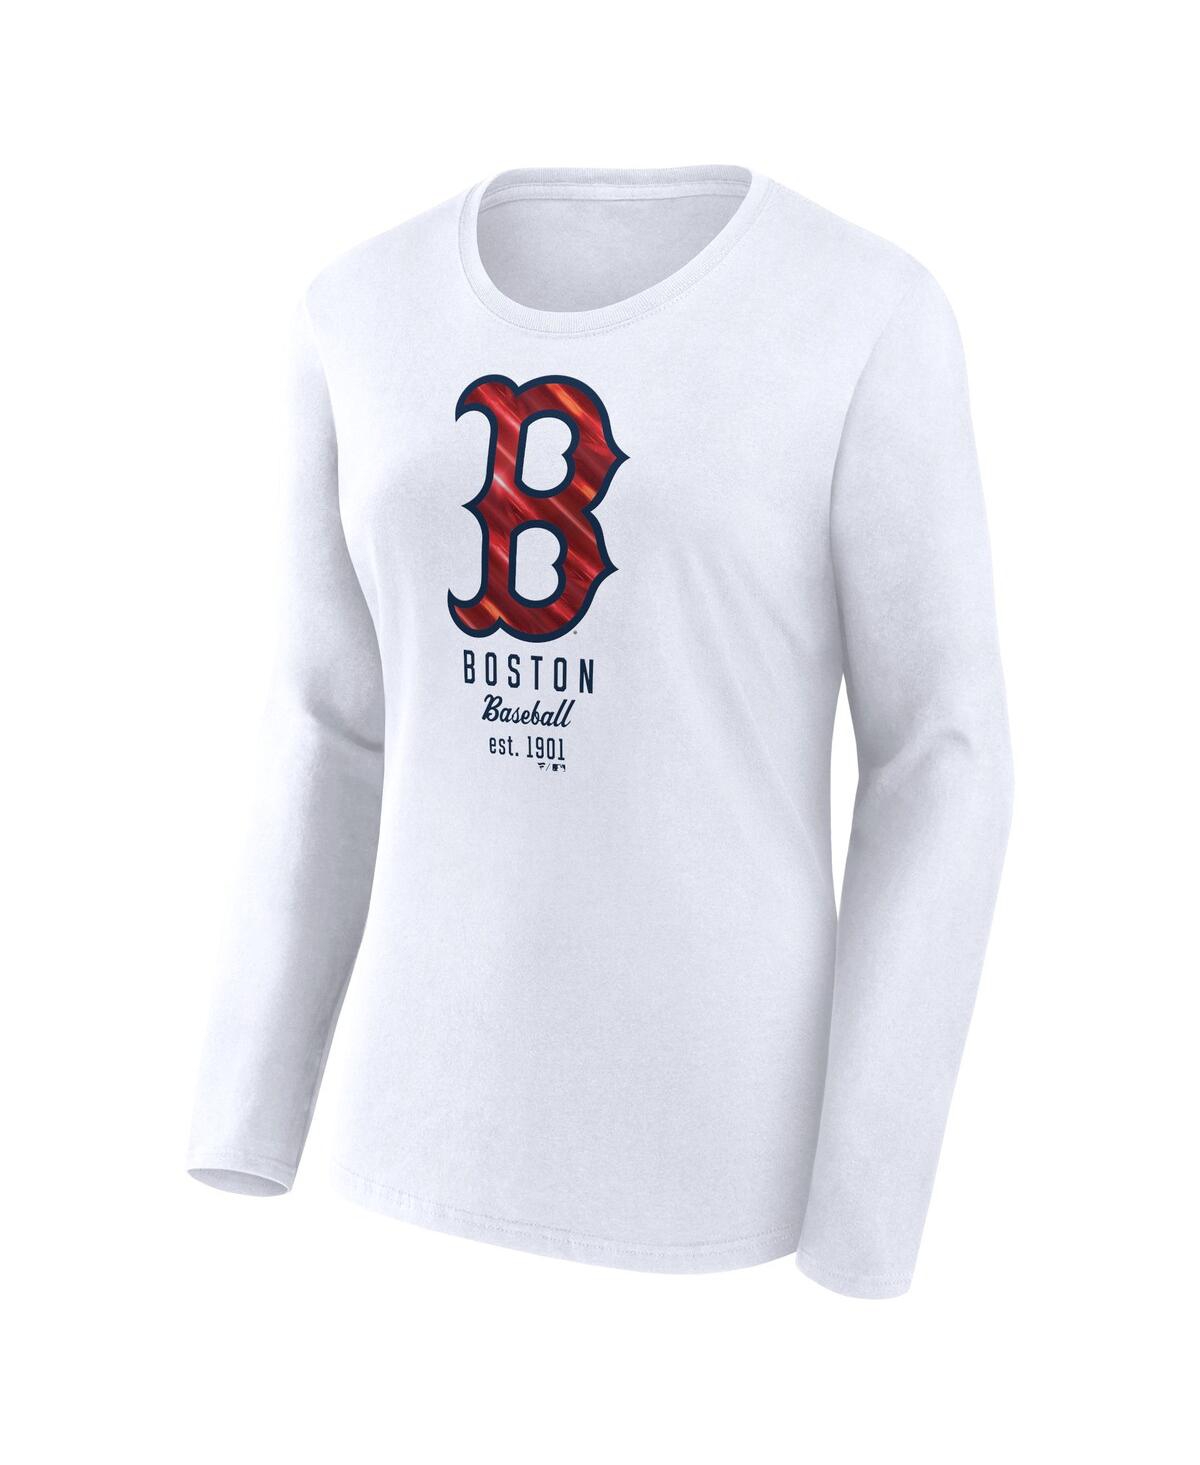 boston red sox - Boston Red Sox - Long Sleeve T-Shirt